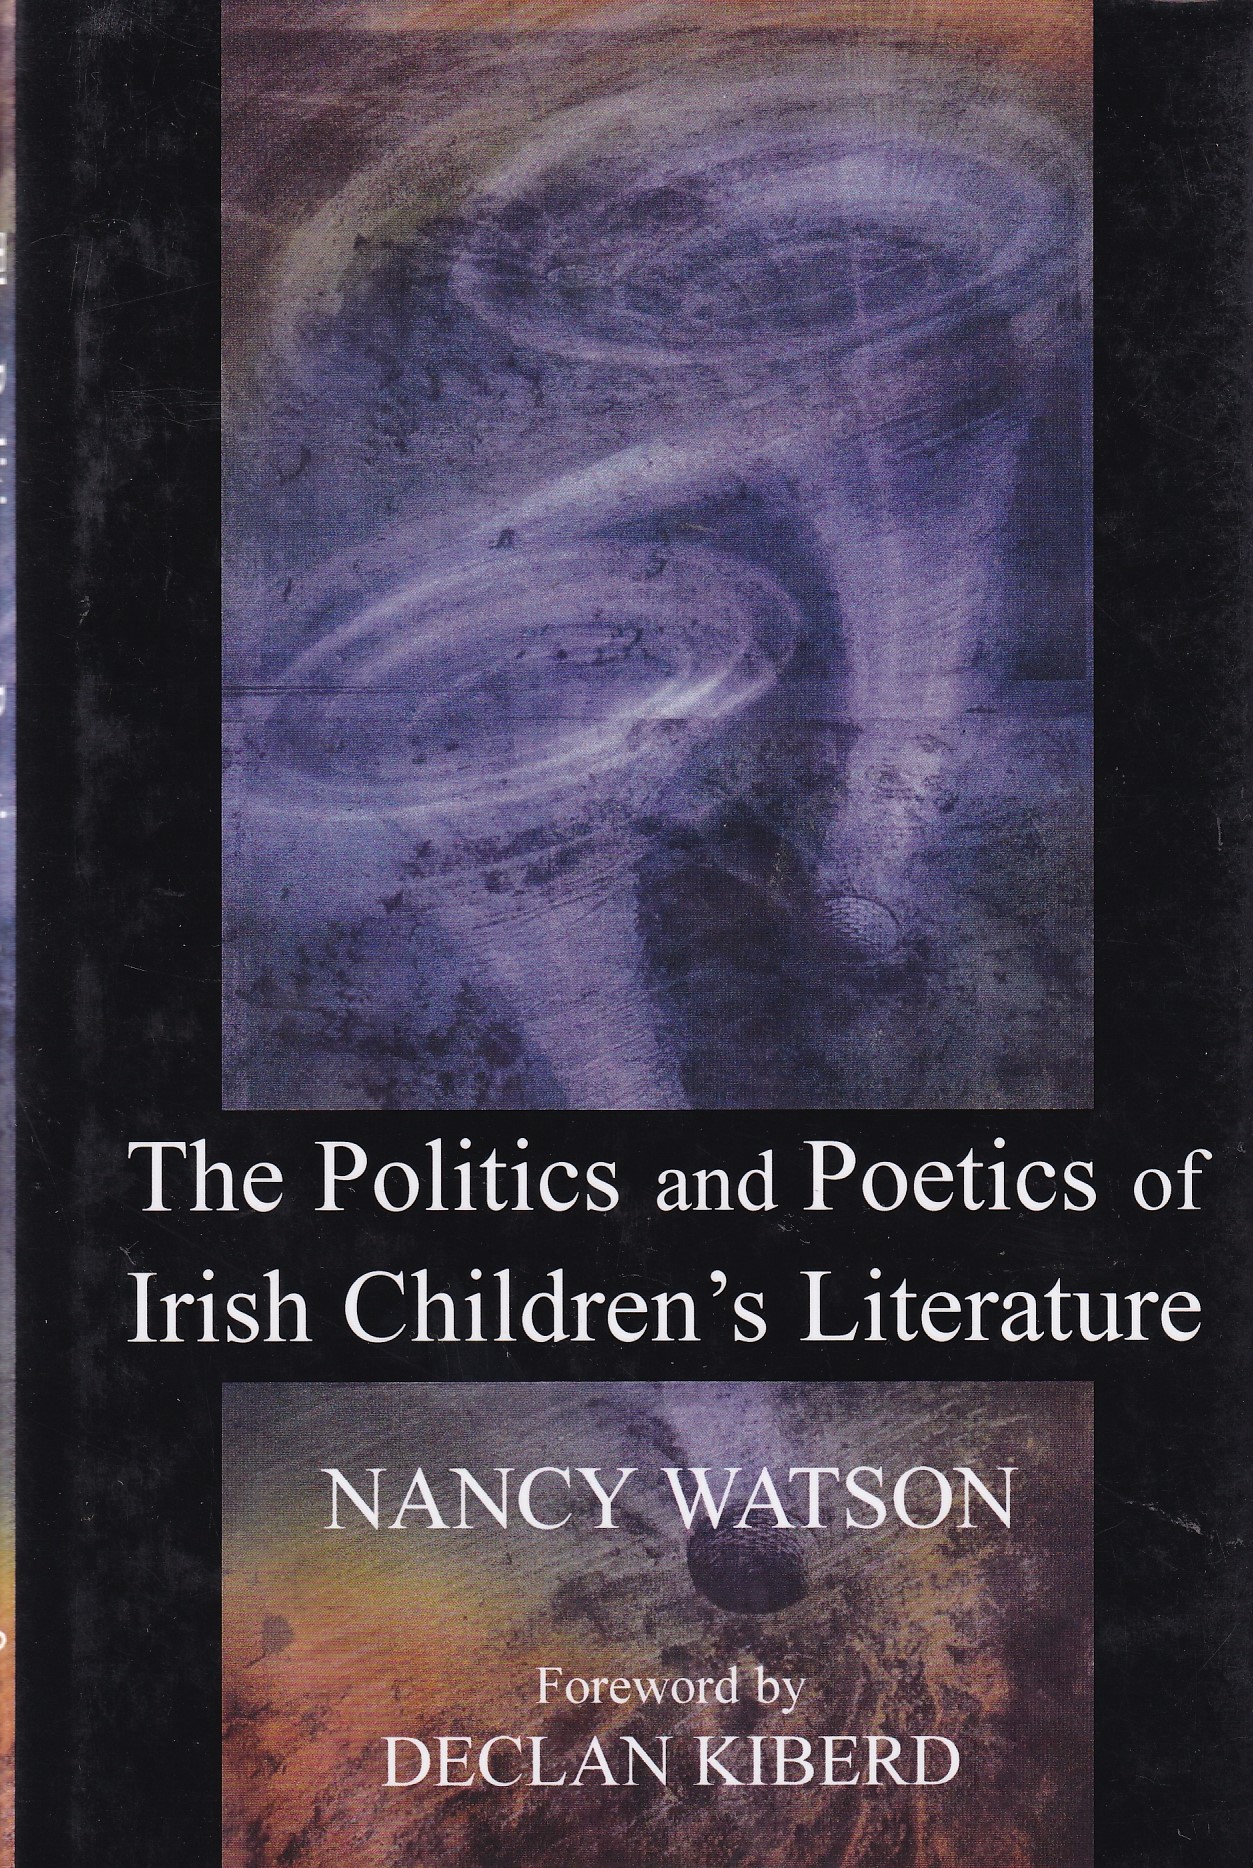 The Politics and Poetics of Irish Children’s Literature | Nancy Watson | Charlie Byrne's